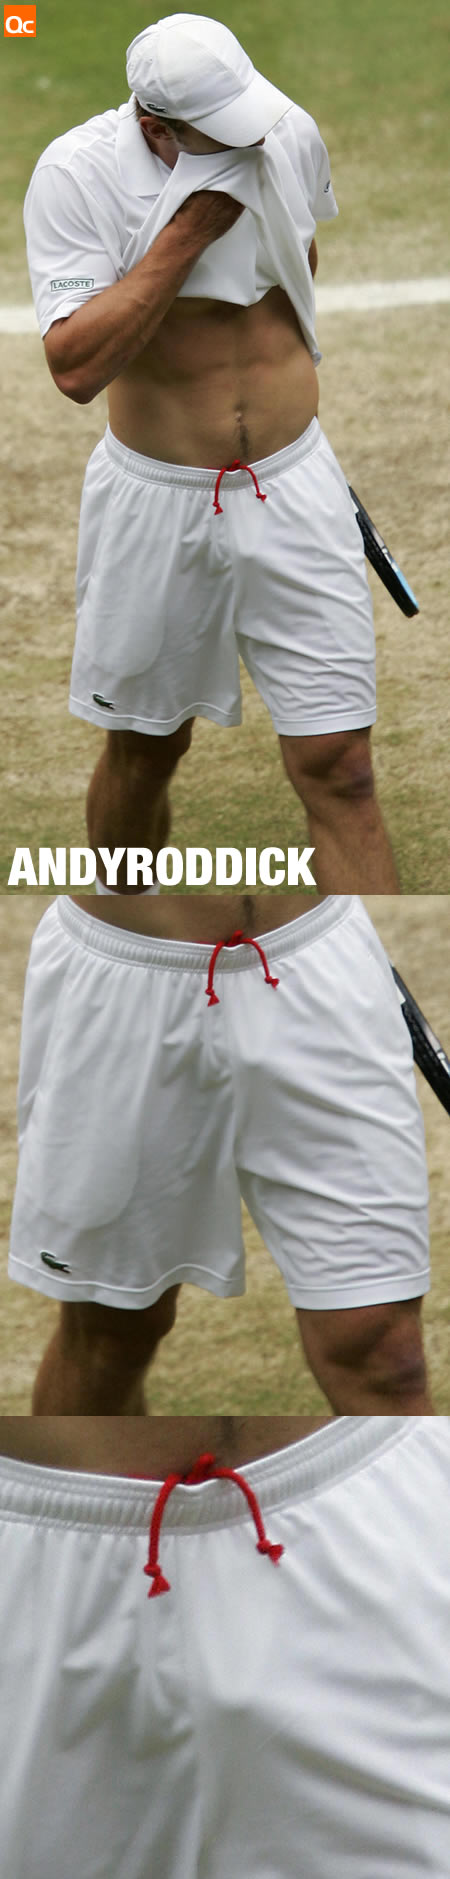 roddick nude cock naked Andy